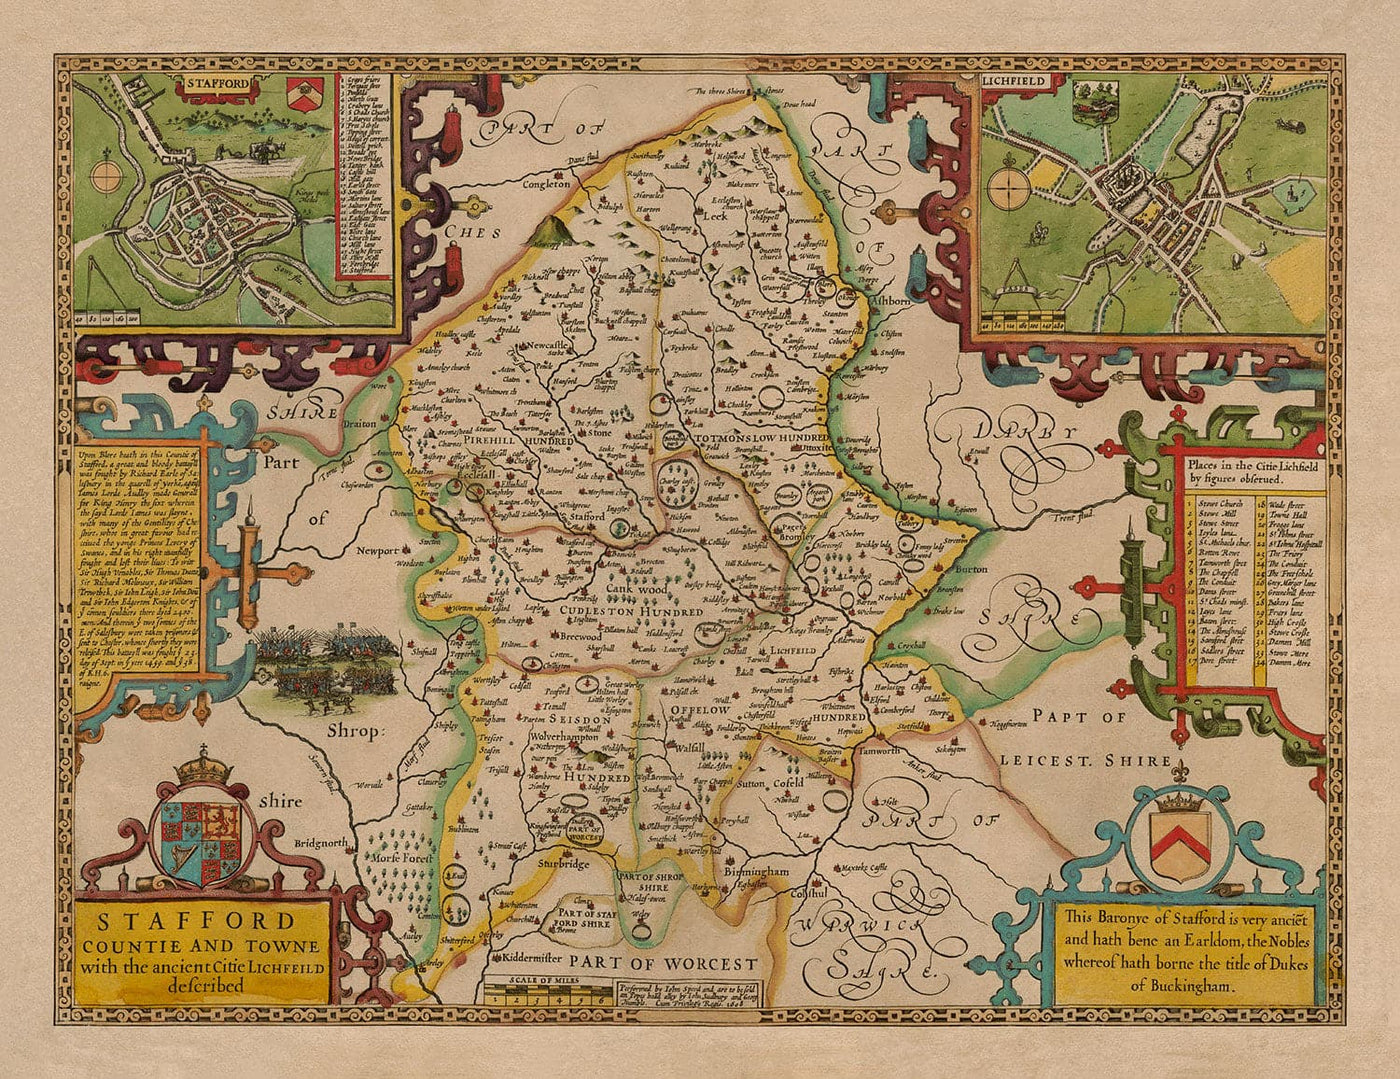 Old Map of Staffordshire, 1611 by John Speed - Stafford, Wolverhampton, Stoke-on-Trent, Lichfield, Birmingham, Dudley, Walsall